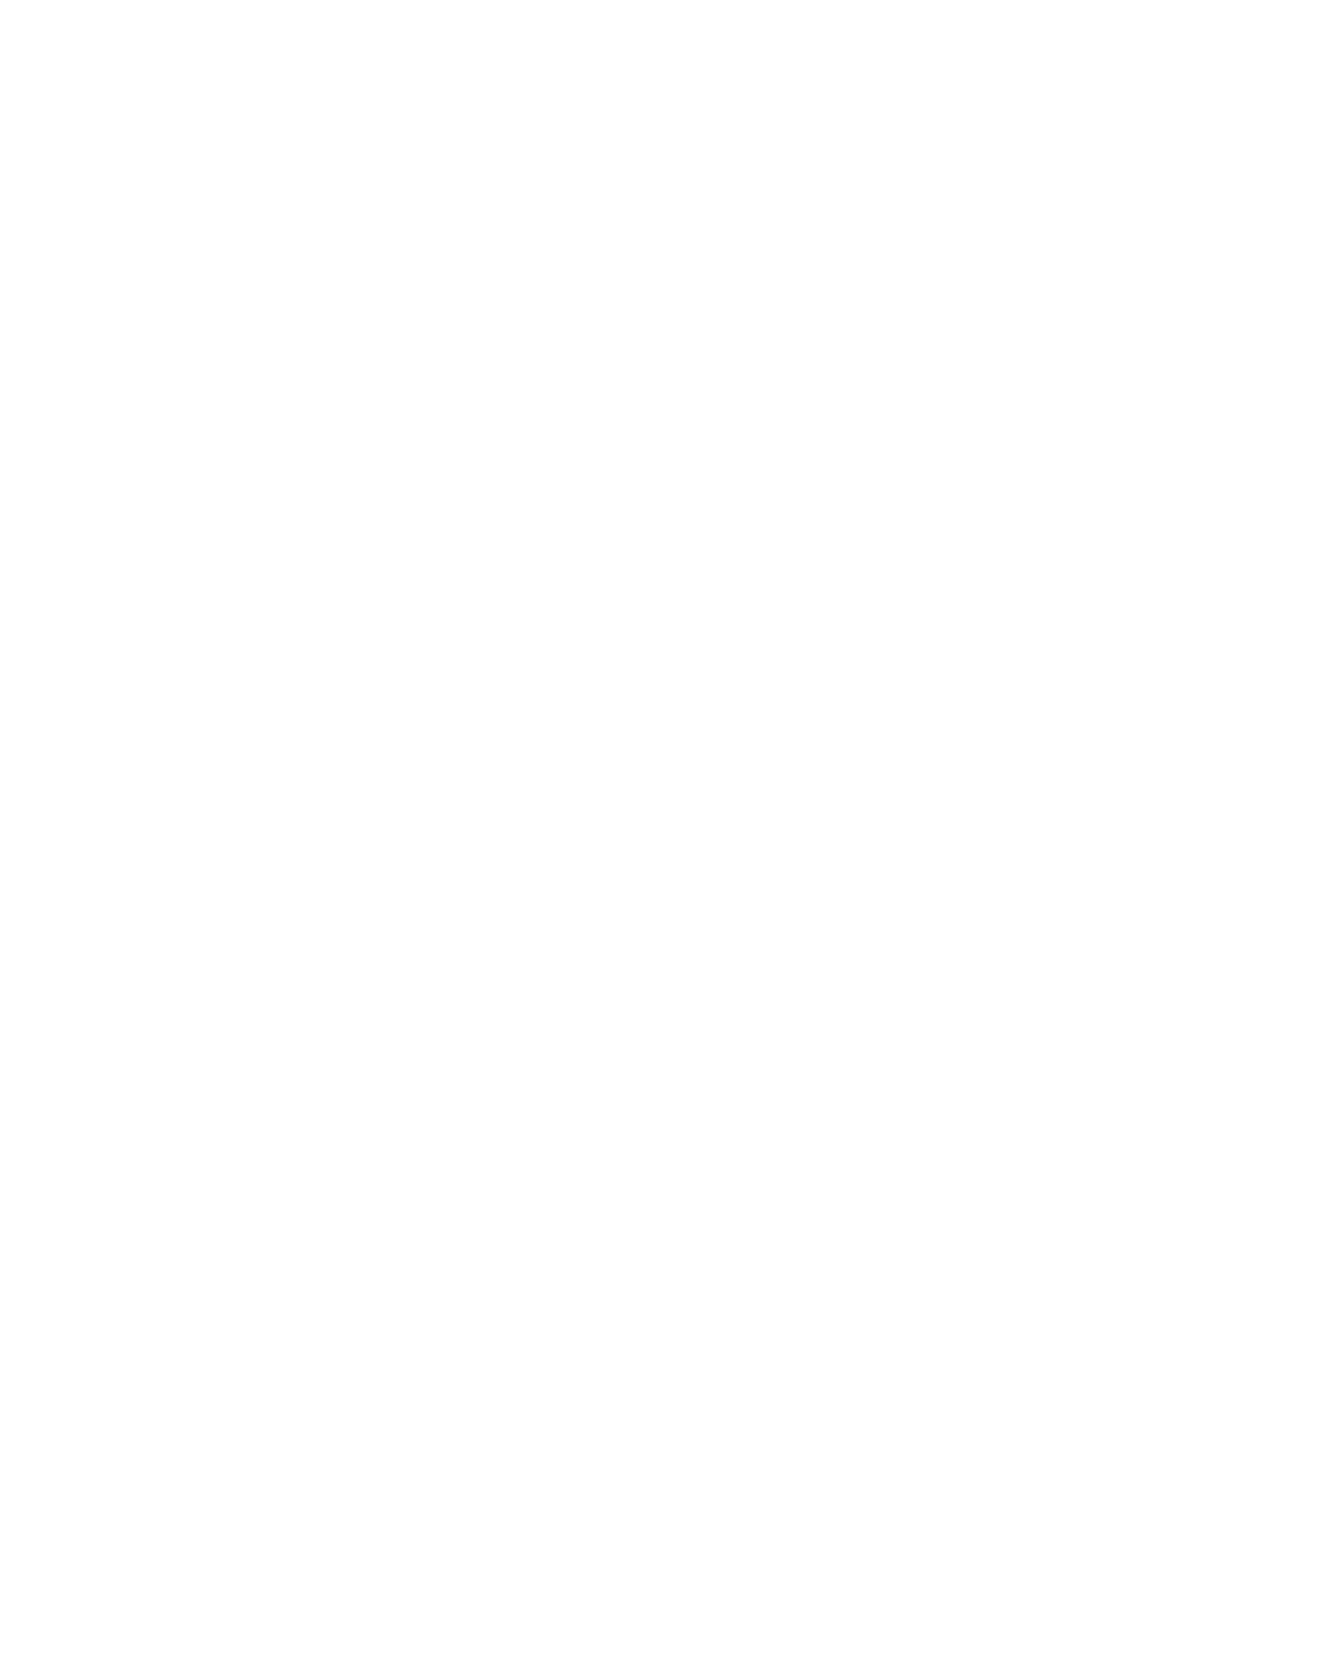 Indian Railway Catering & Tourism Logo groß für dunkle Hintergründe (transparentes PNG)